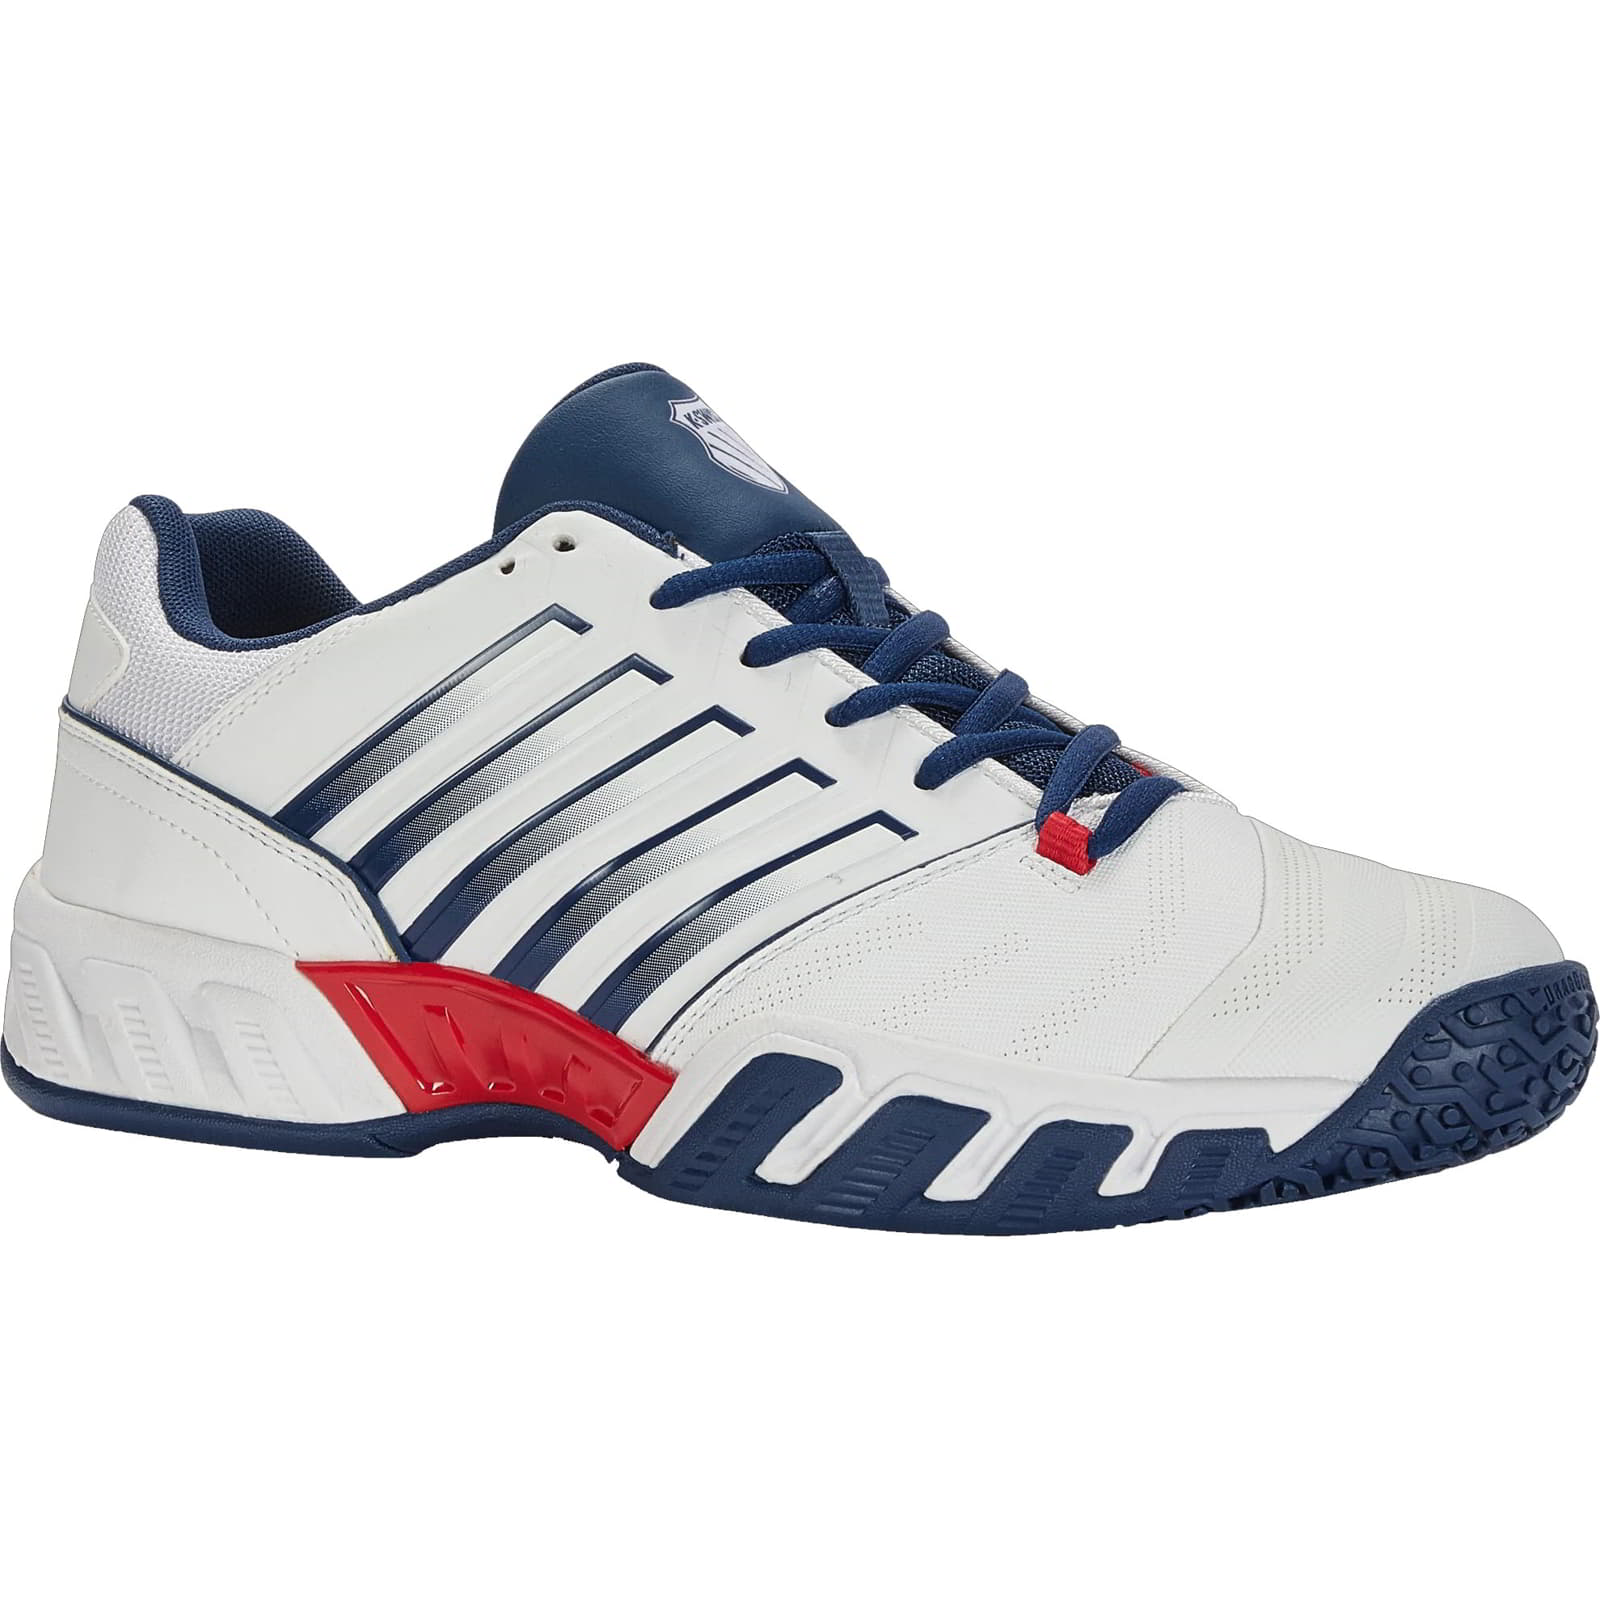 K-Swiss Bigshot Light 4 Omni Tennis Shoes Trainers - UK 9